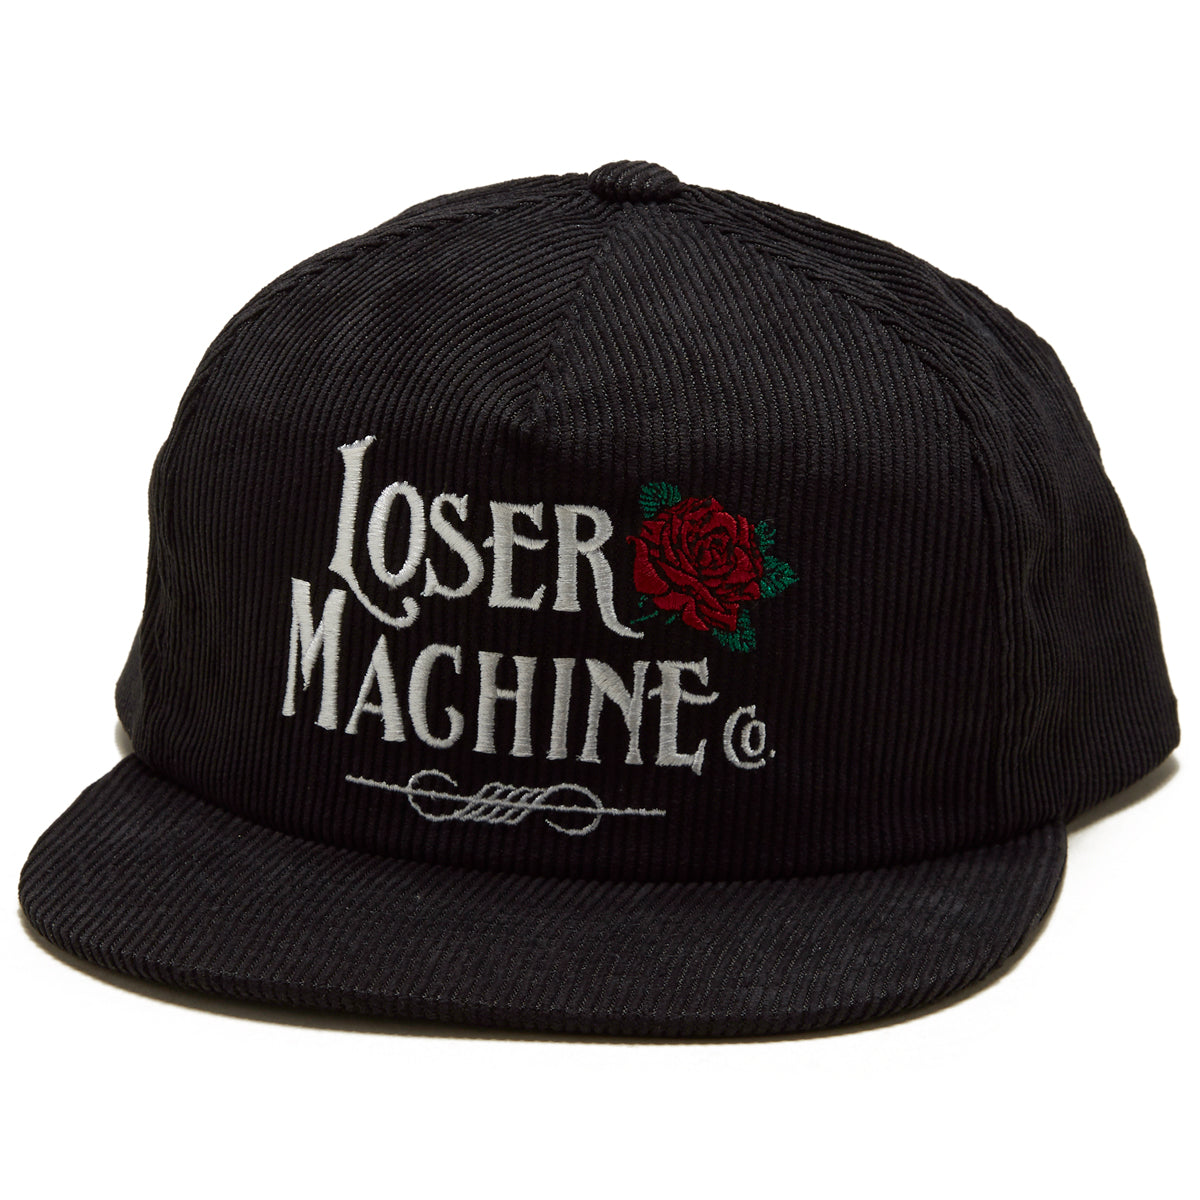 Loser Machine Endless Hat - Black image 1